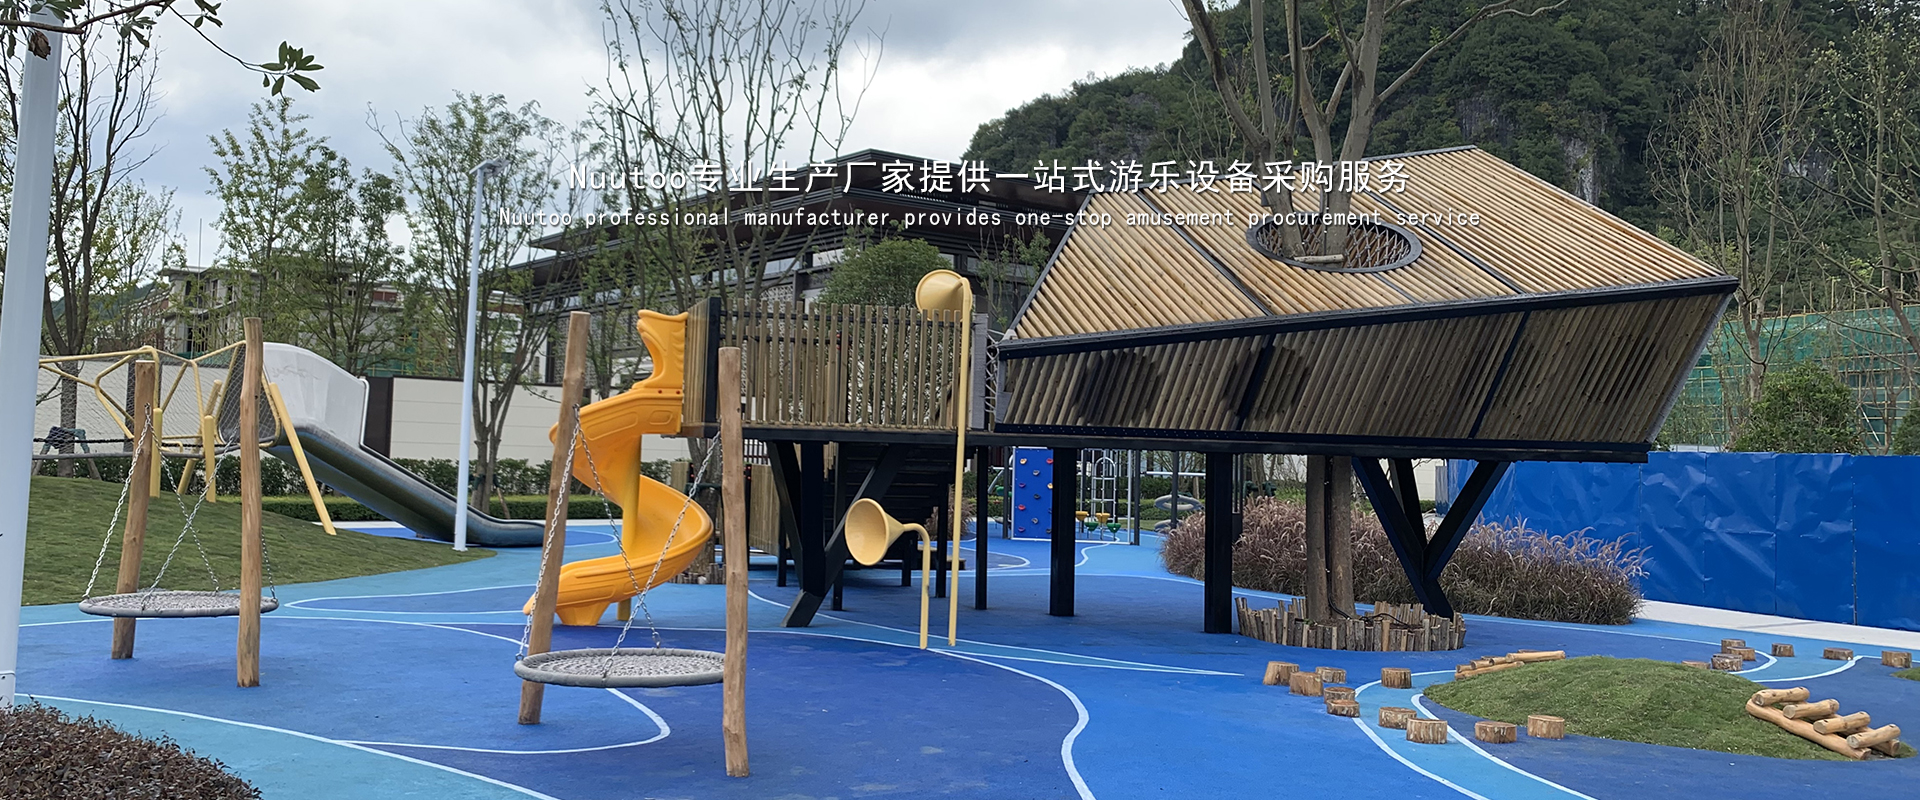 Music outdoor non-standard play equipment + combination slide + stainless steel slide + indoor children's paradise equipment 4